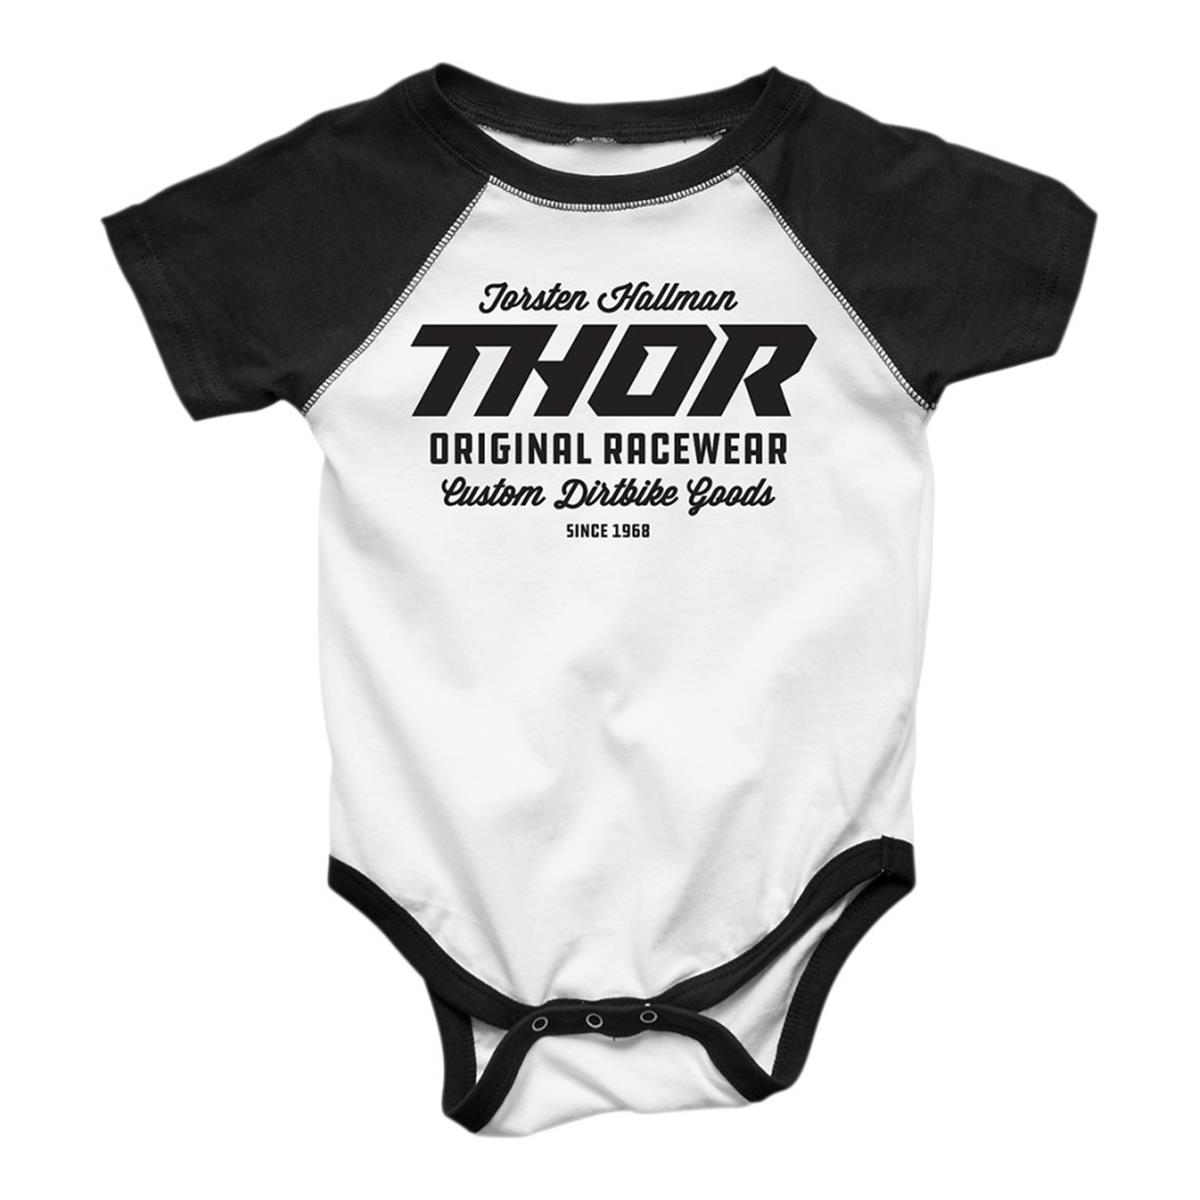 Thor Baby Body The Goods Supermini - Black